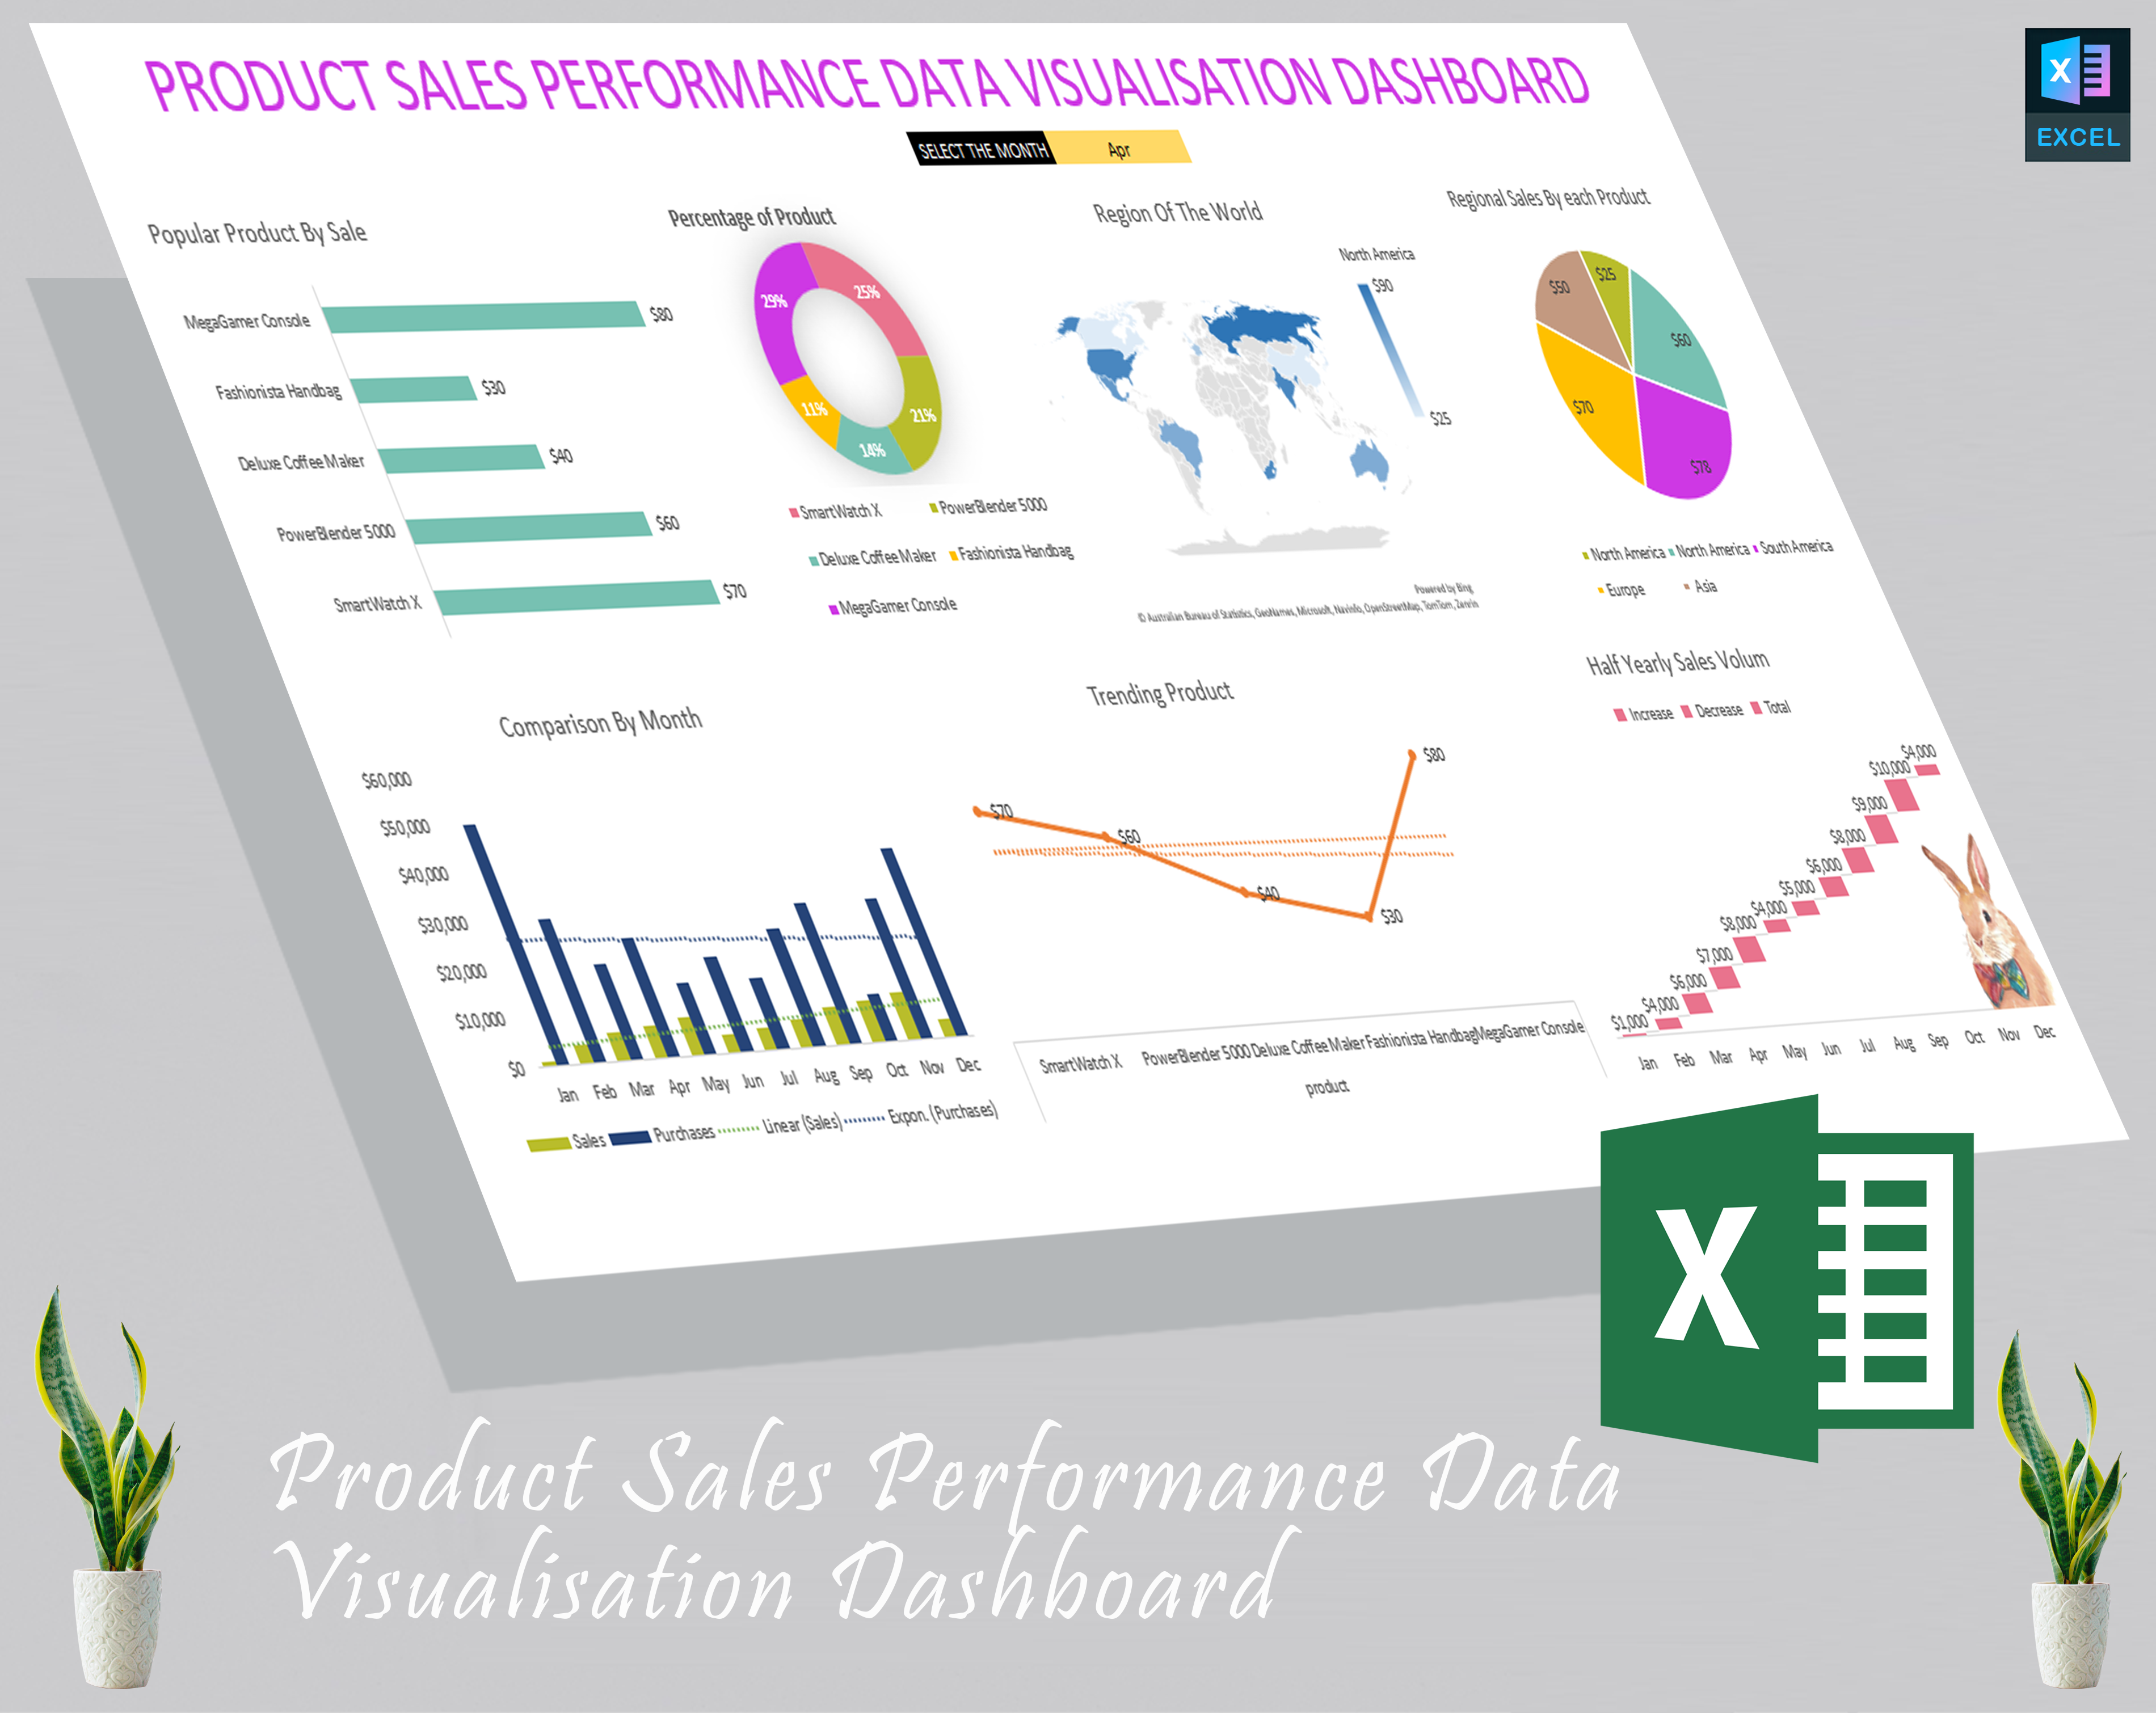 Product sales performance data visualisation dashboard